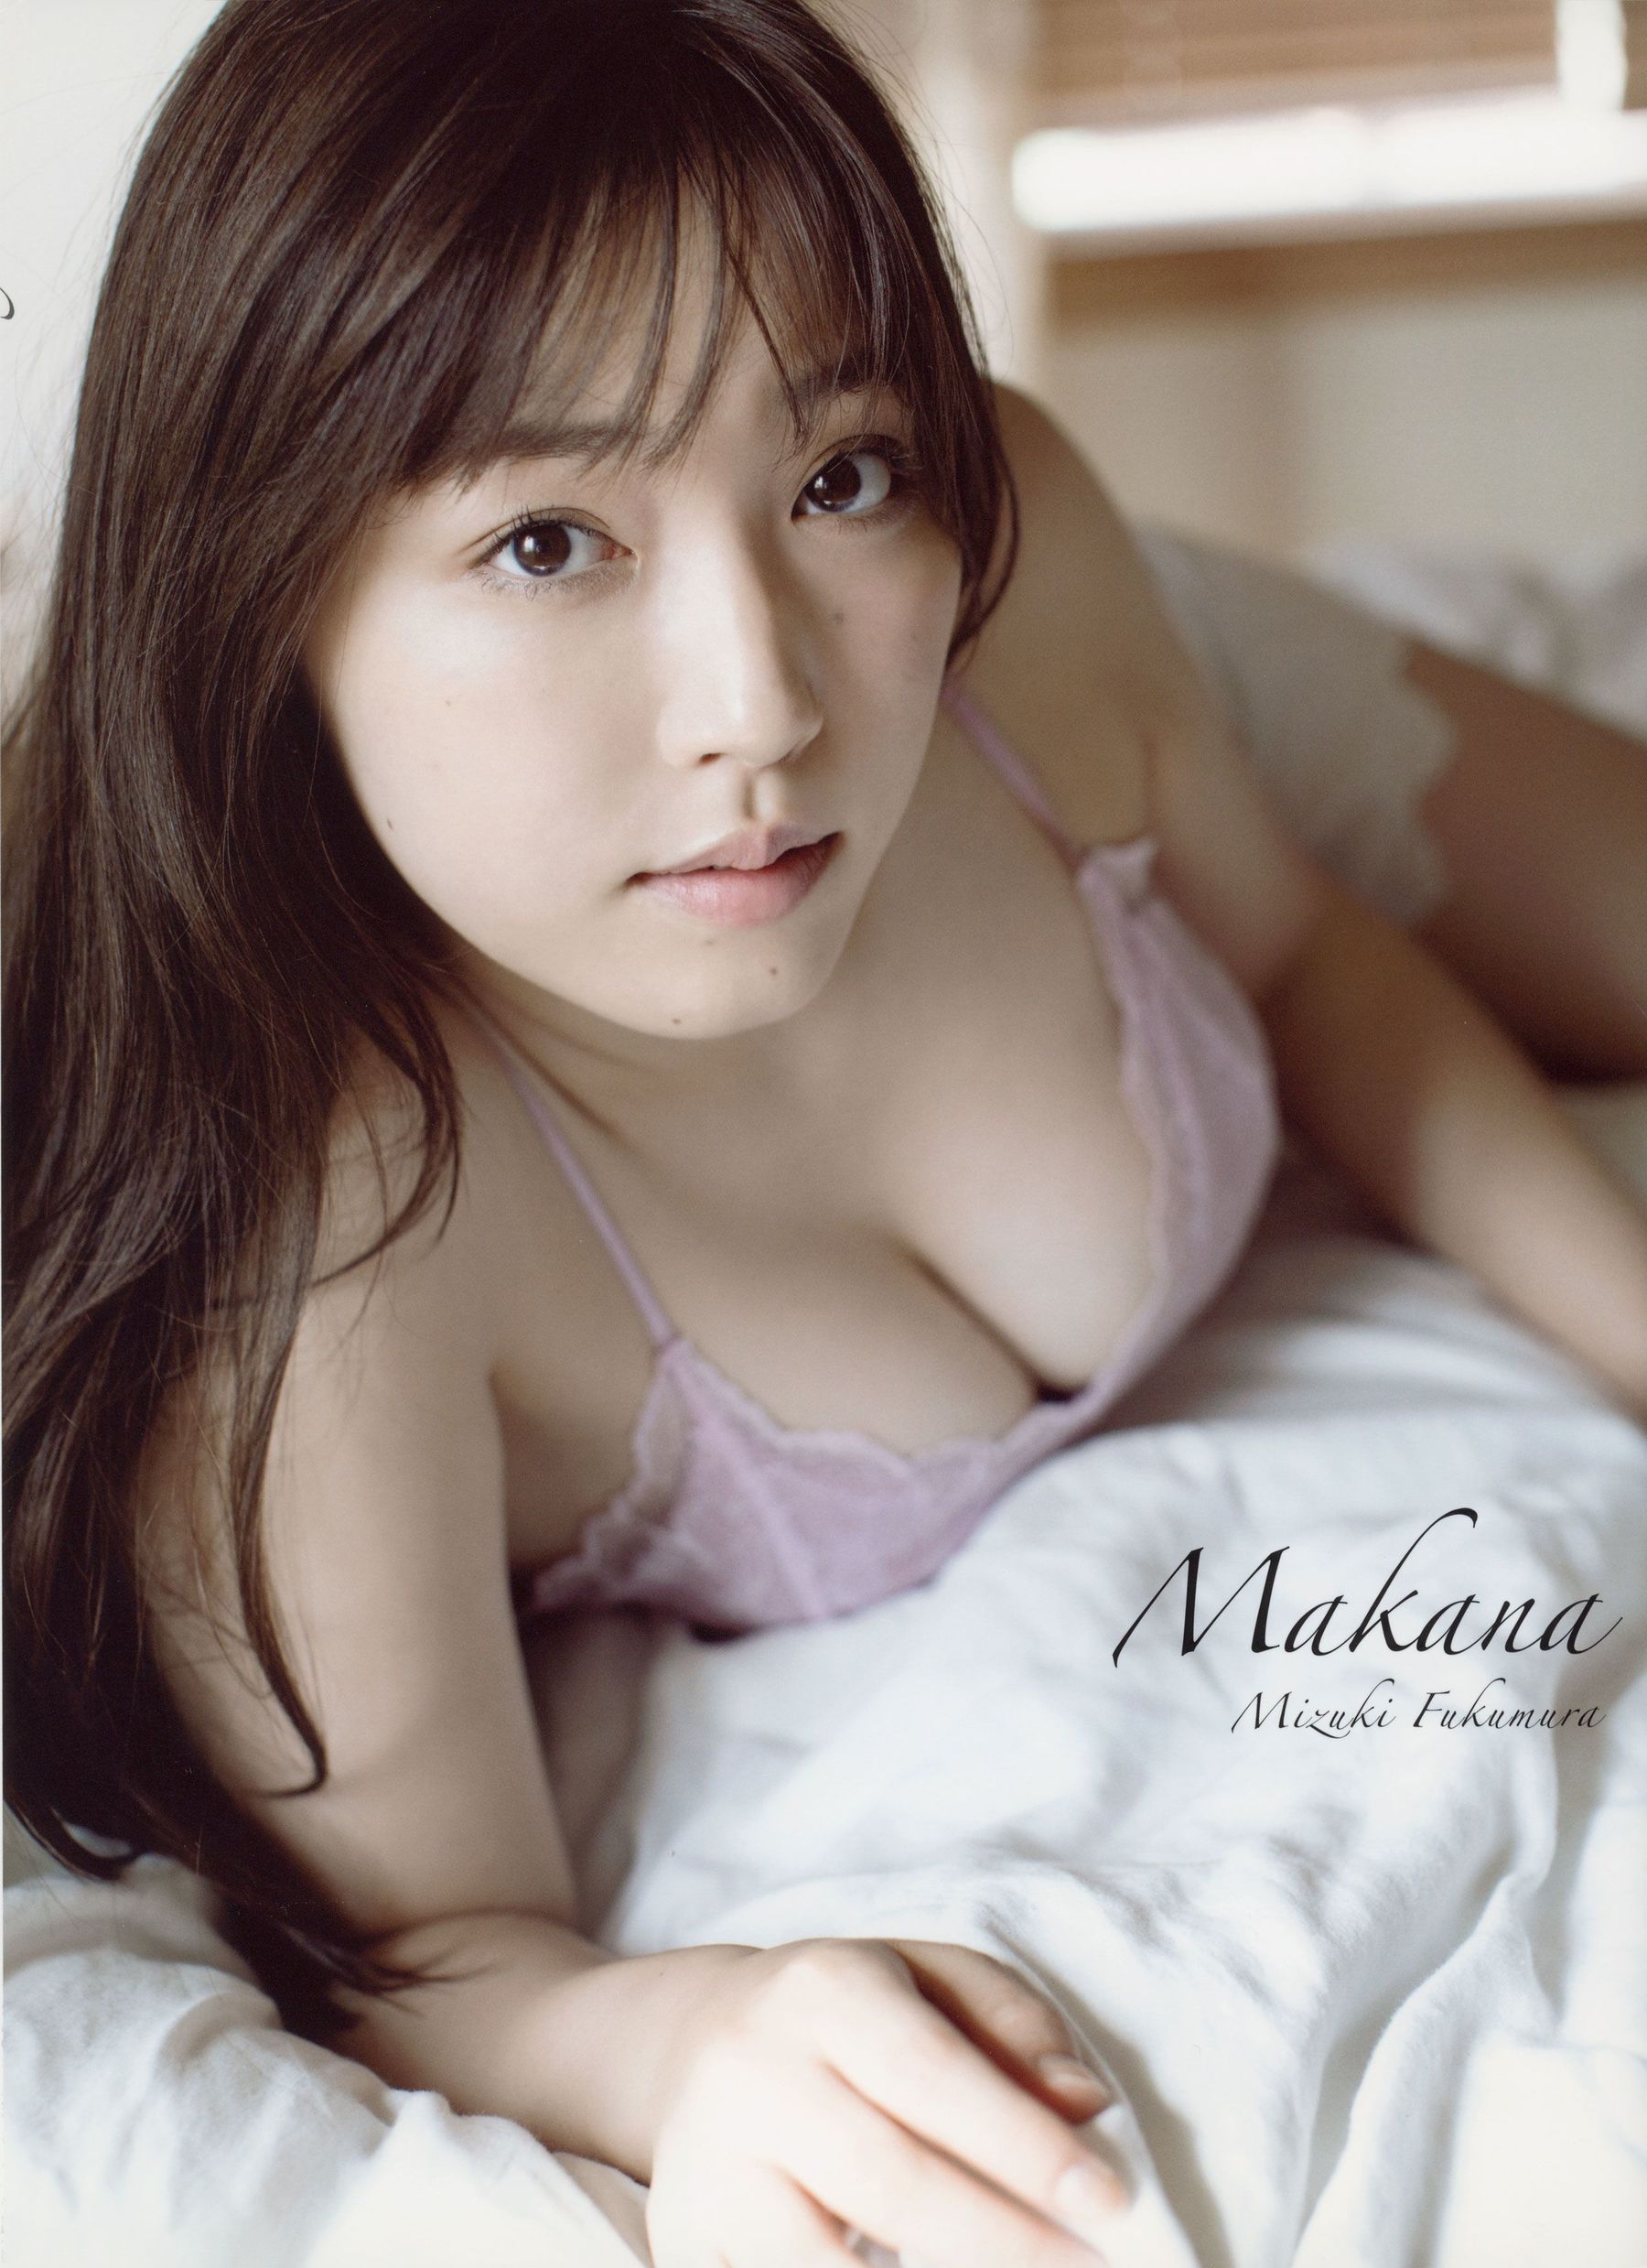 [pb] Mizuki Fukumura モーニンク?娘。 18 譜久村聖  『 Makana 』 